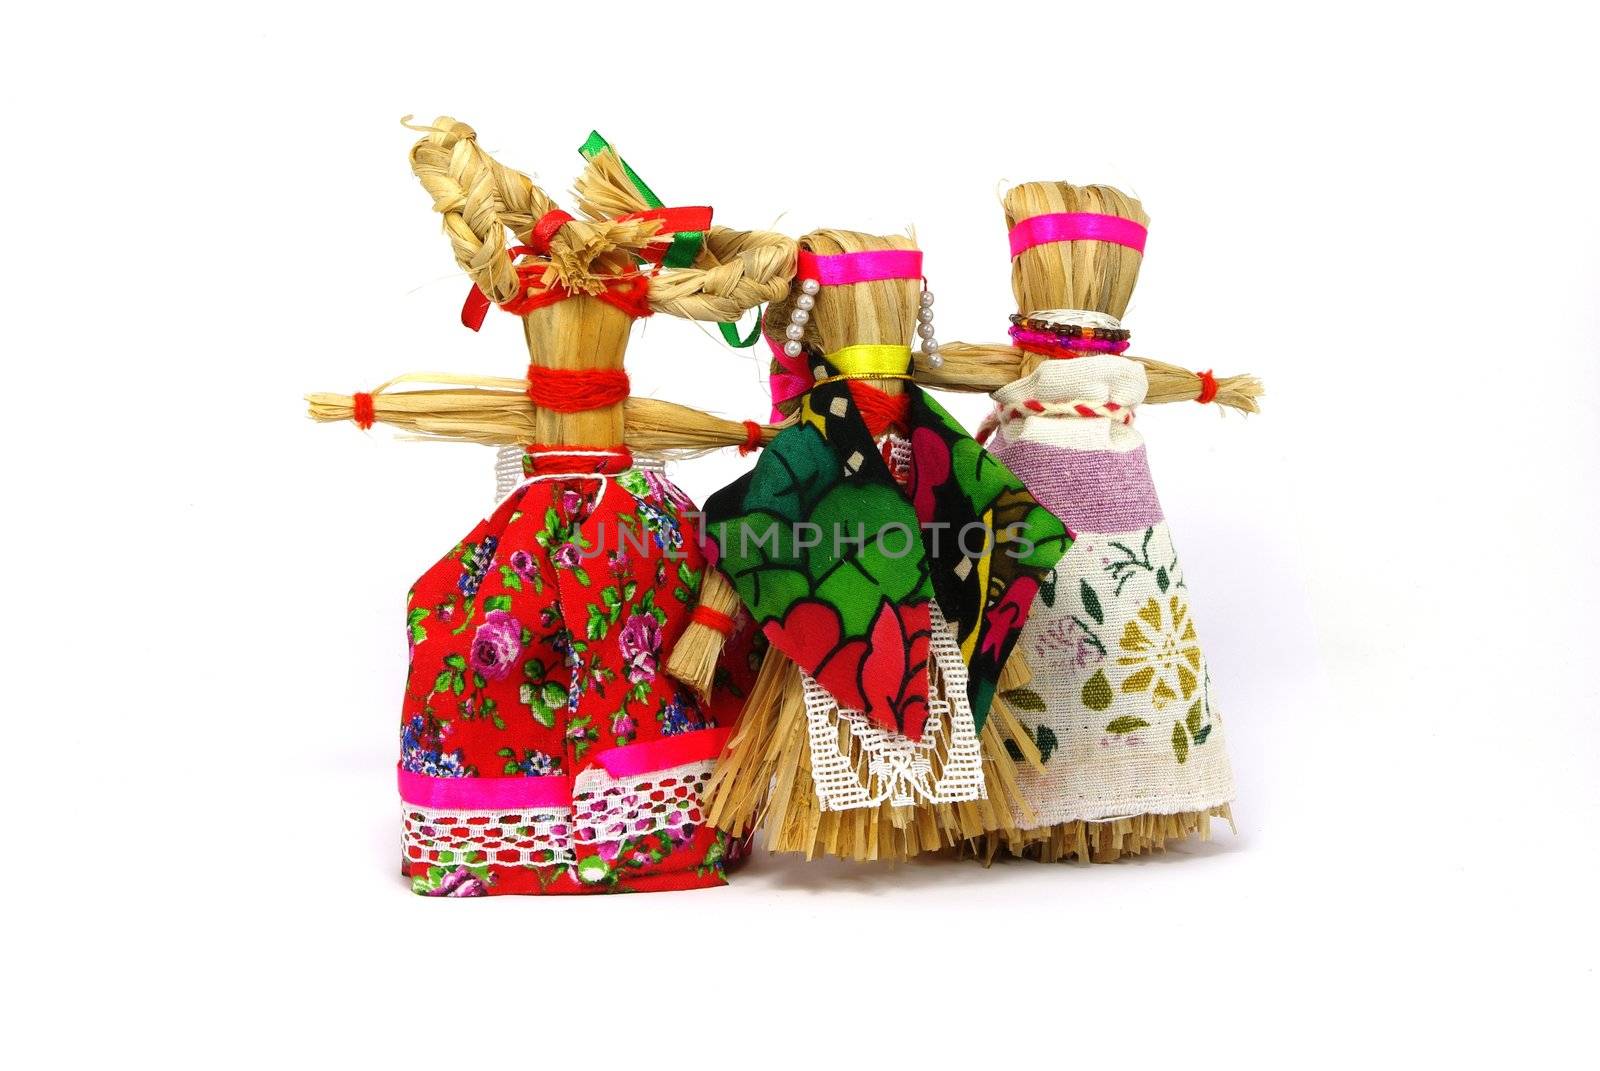 Slavic holiday carnival handmade dolls